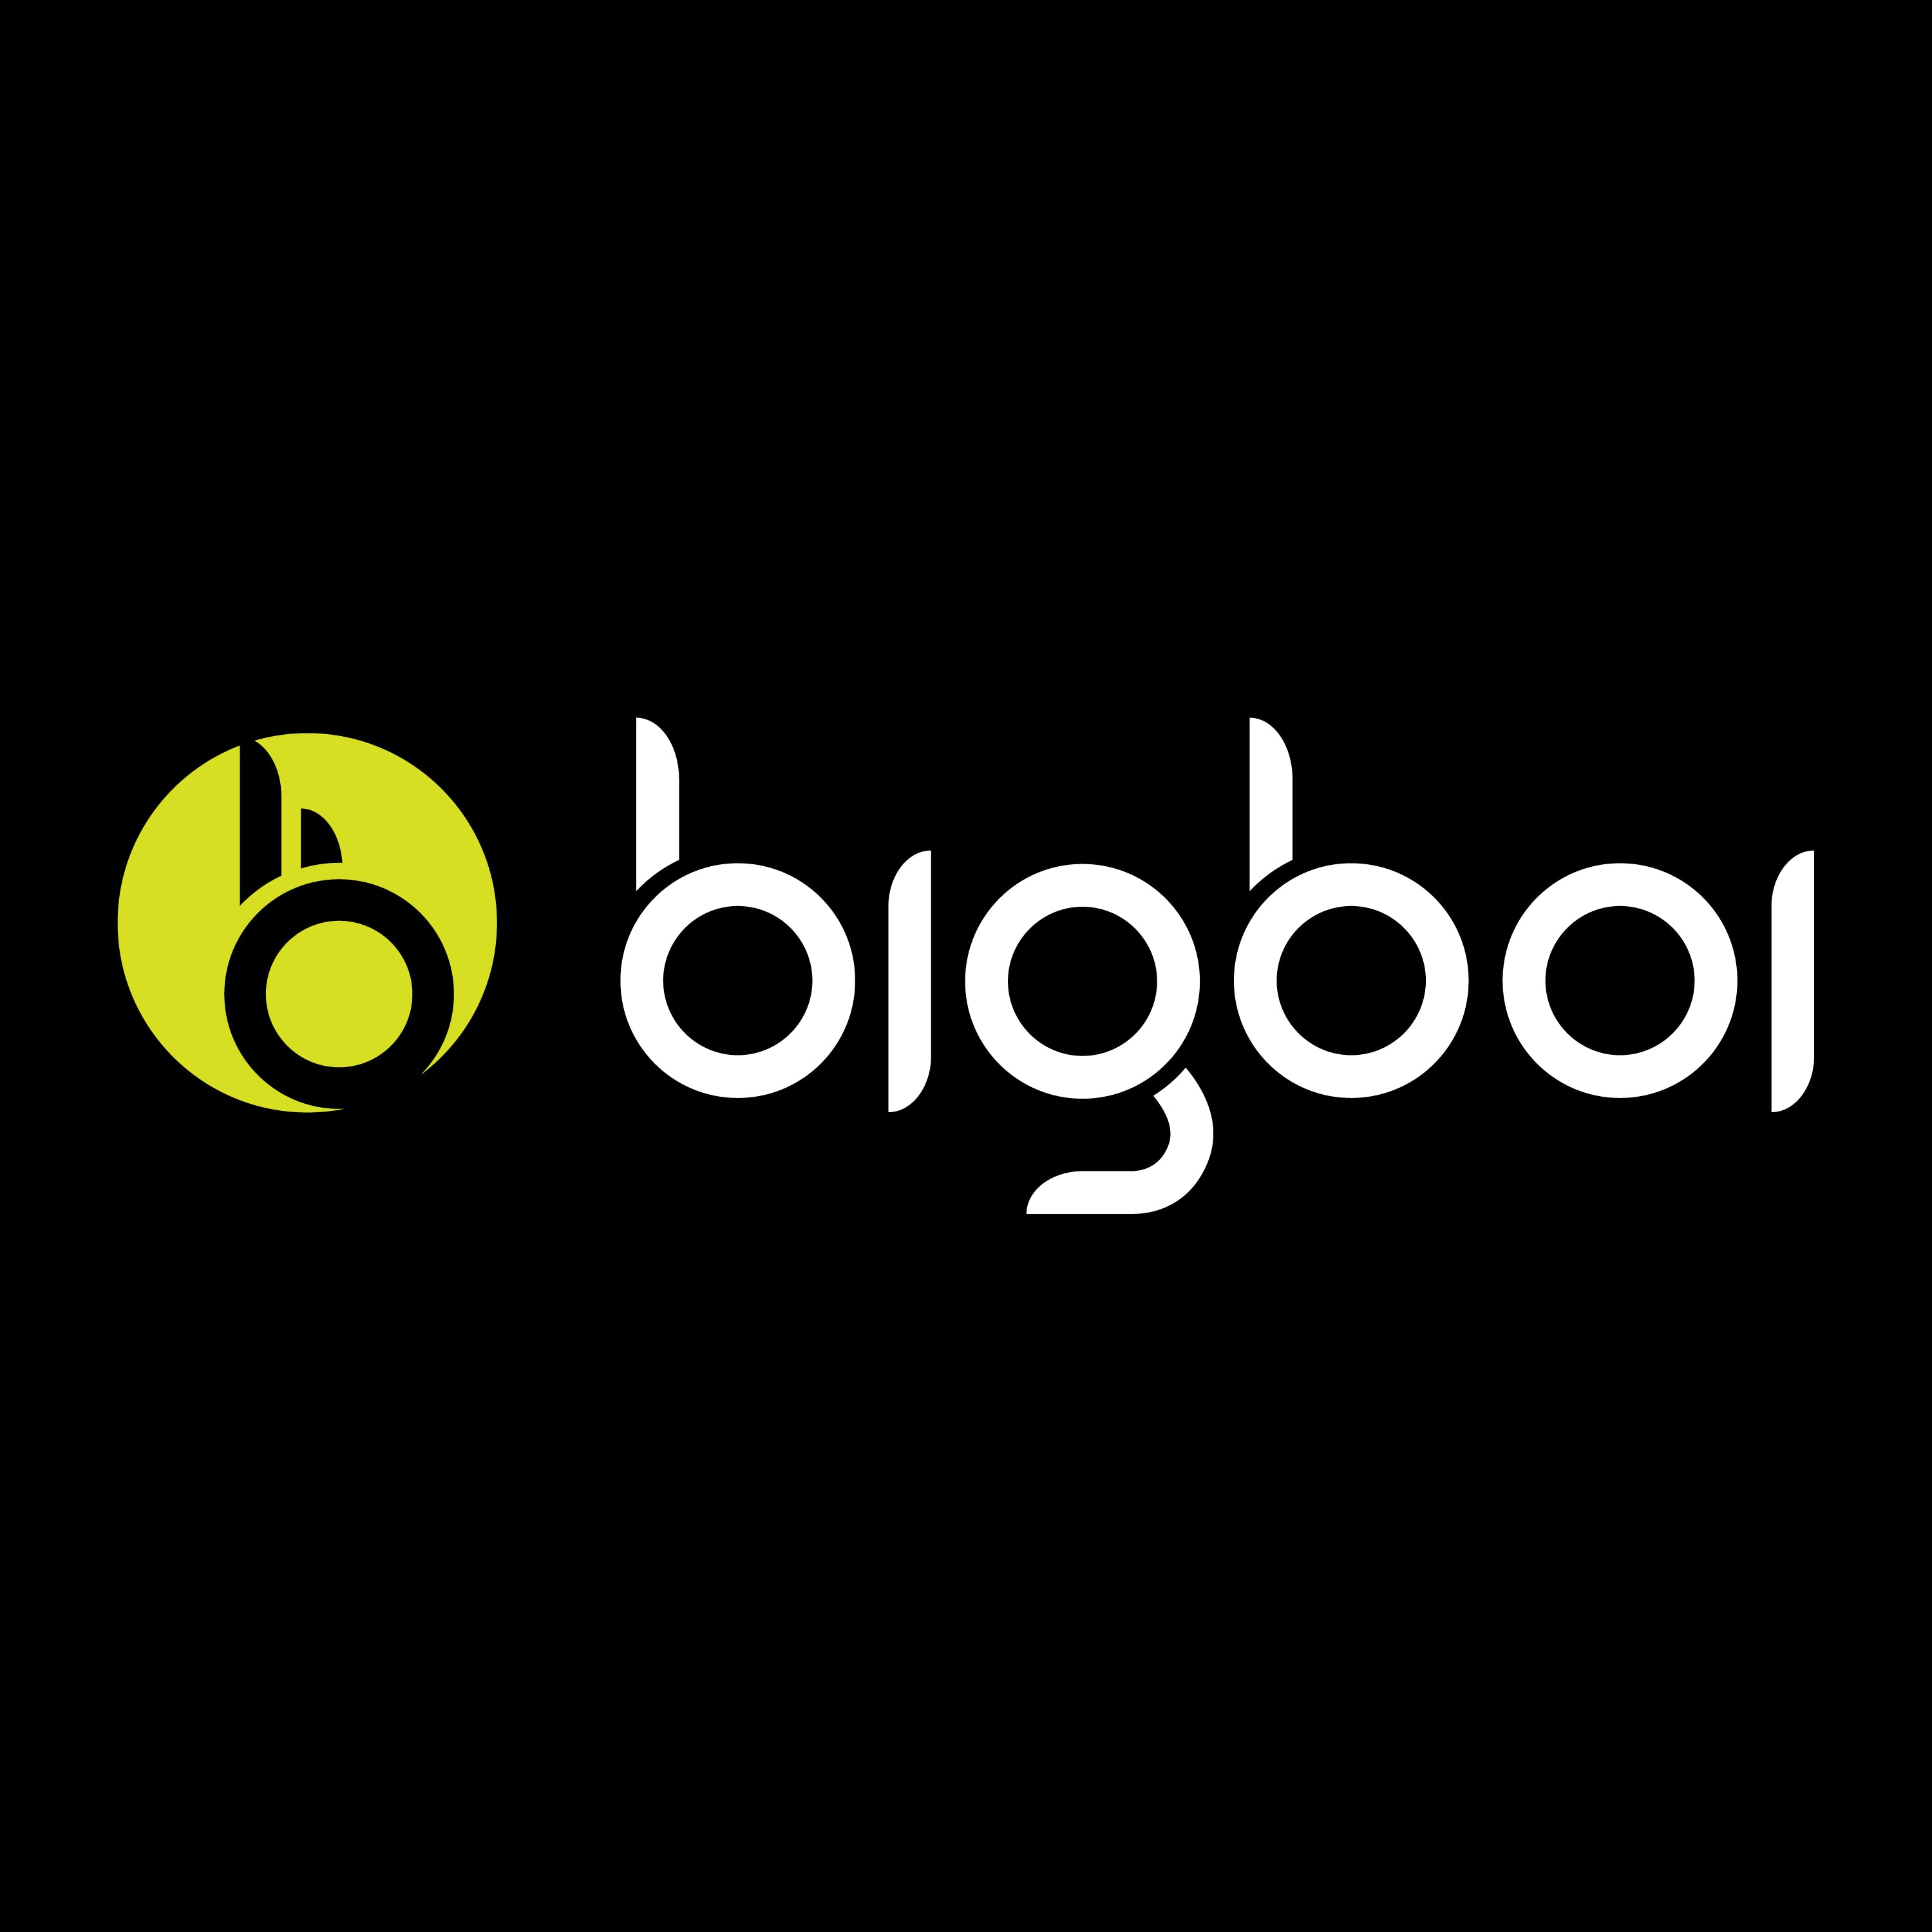 bigboi(ビッグボーイ)